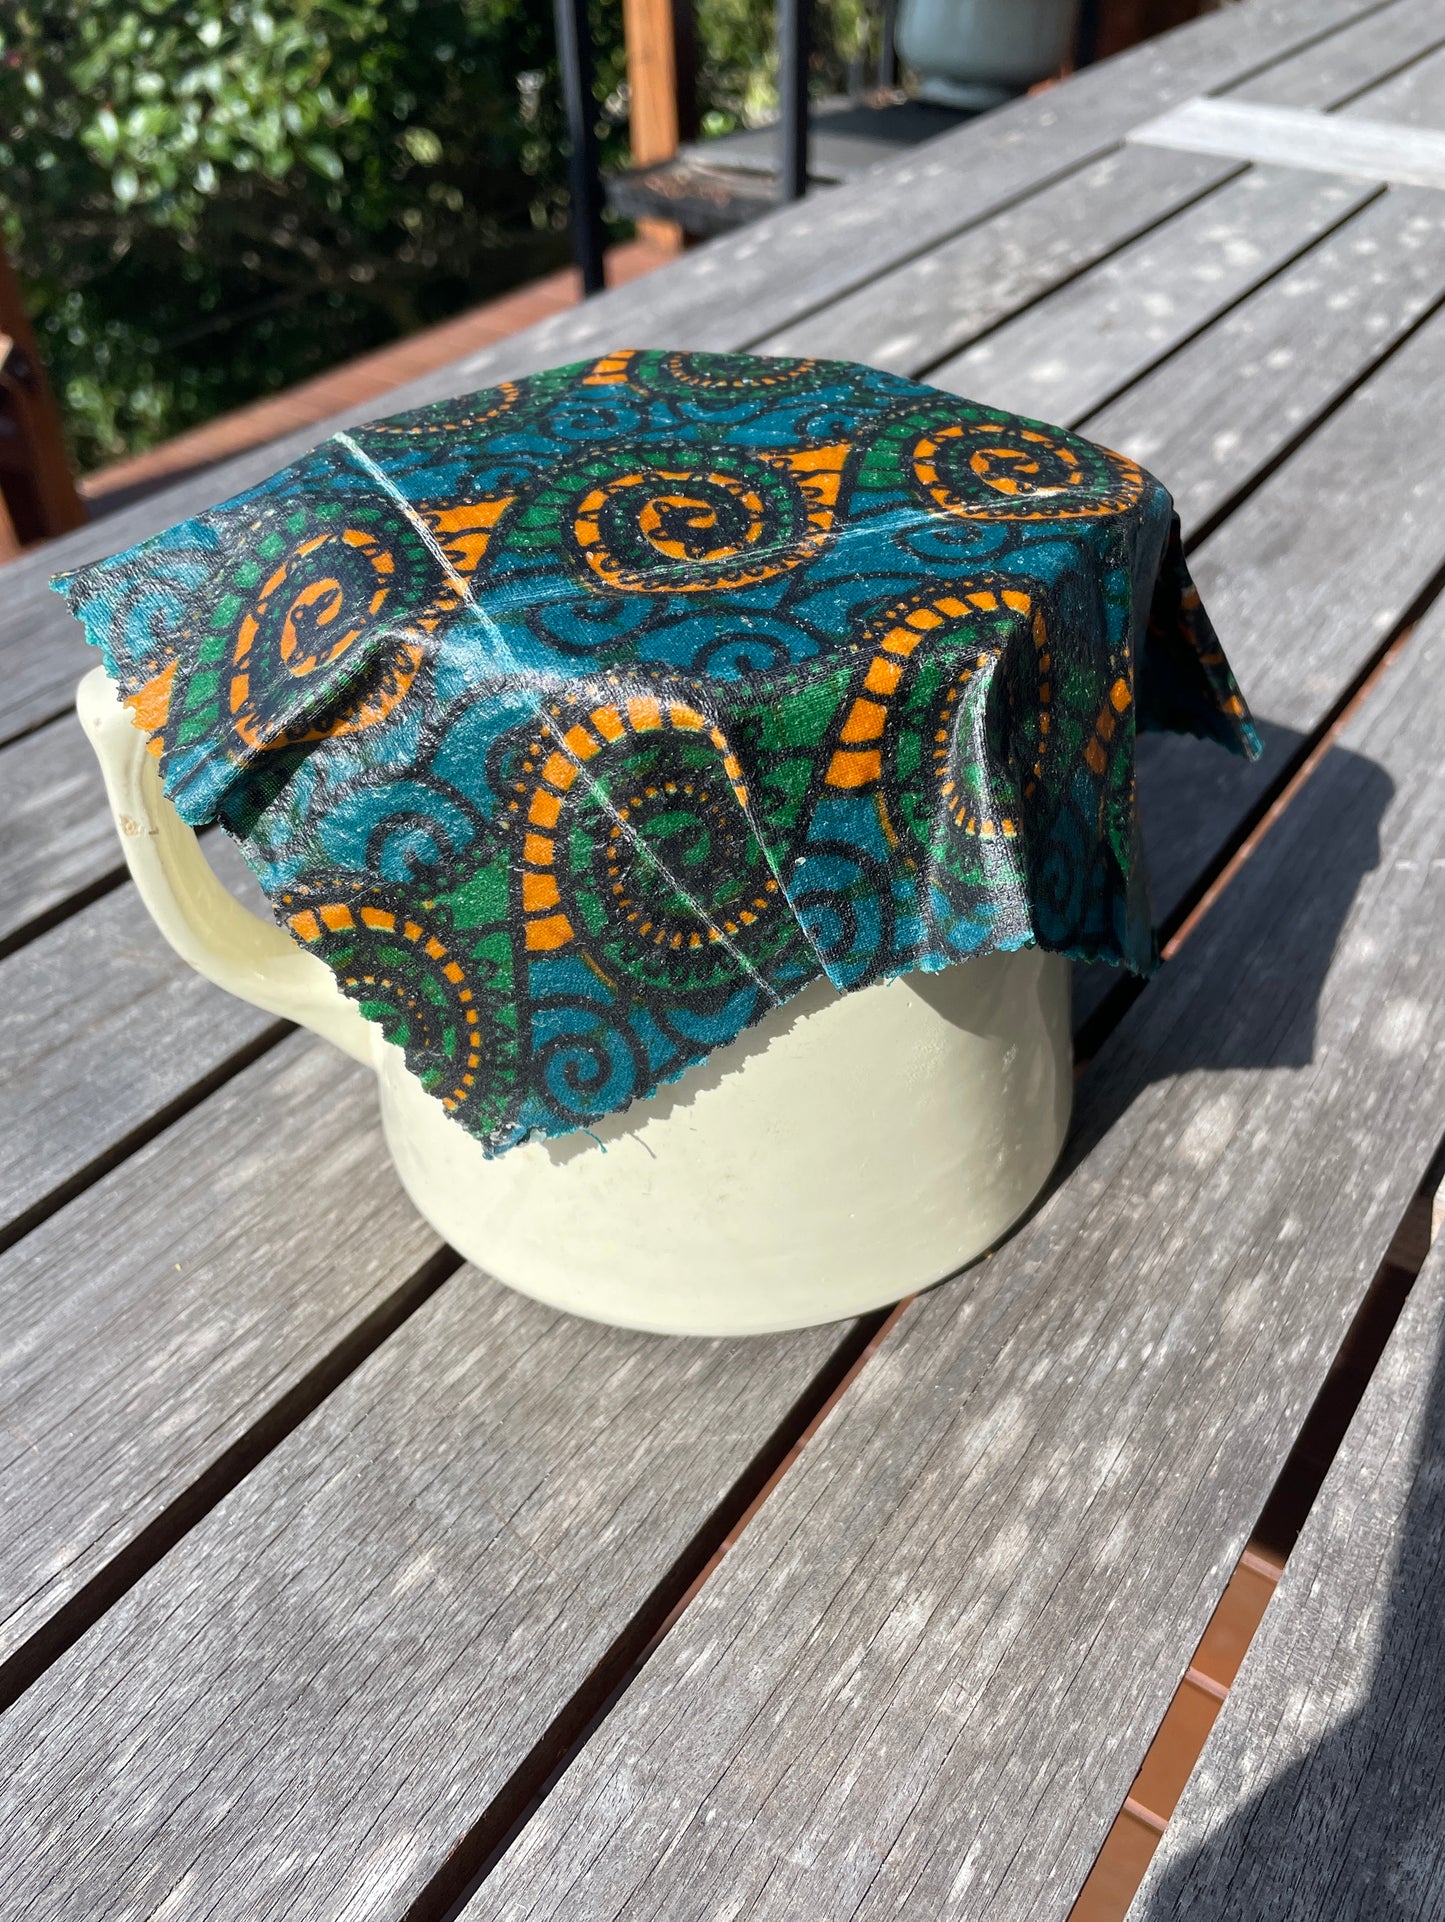 uganda-reusable-food wrap-eco friendly-plastic free-storage-african-cotton-fabric-natural beeswax-rosin-handmade-artisan-pattern-multicoloured